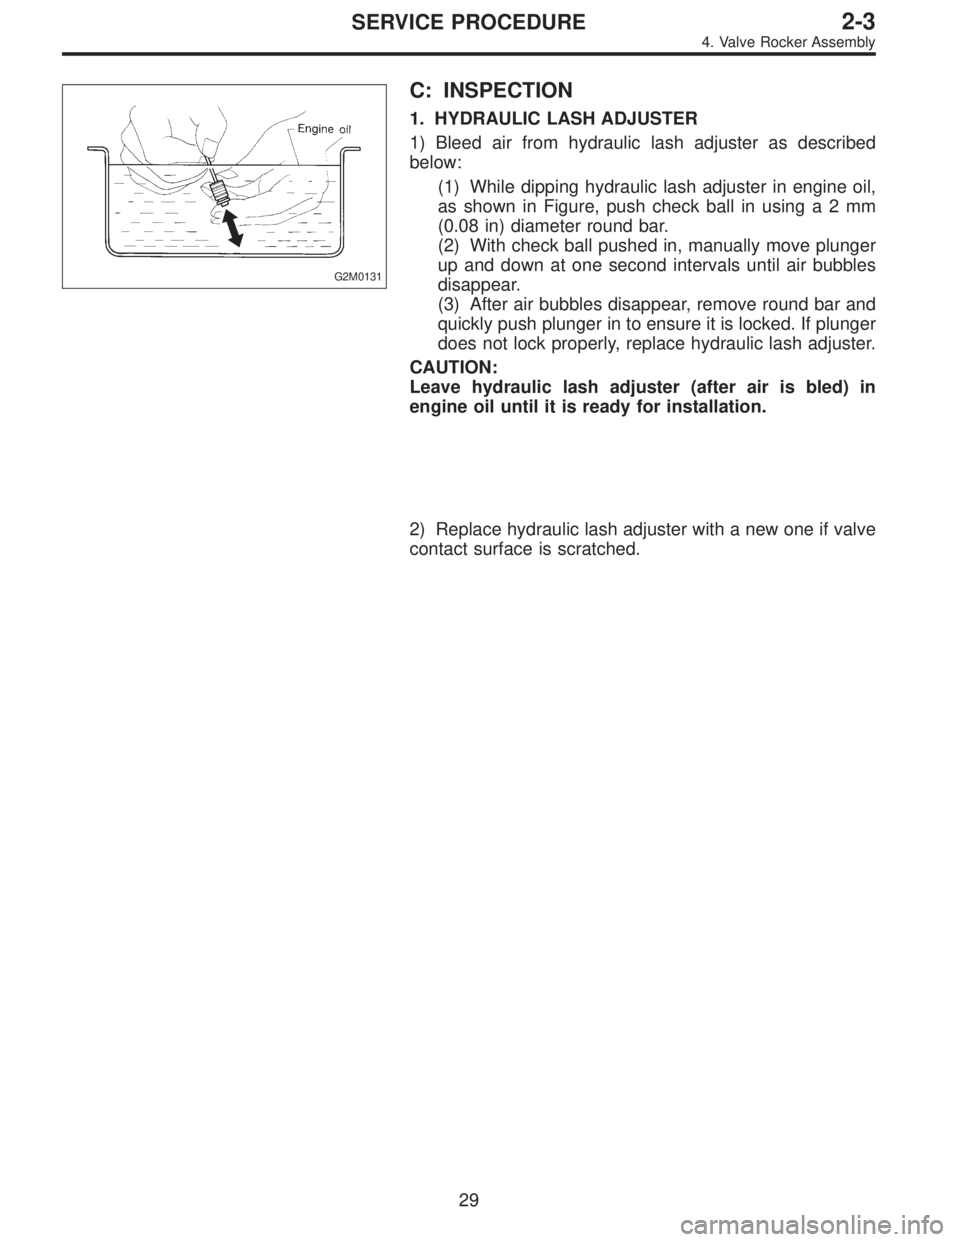 SUBARU LEGACY 1997  Service Repair Manual G2M0131
C: INSPECTION
1. HYDRAULIC LASH ADJUSTER
1) Bleed air from hydraulic lash adjuster as described
below:
(1) While dipping hydraulic lash adjuster in engine oil,
as shown in Figure, push check b